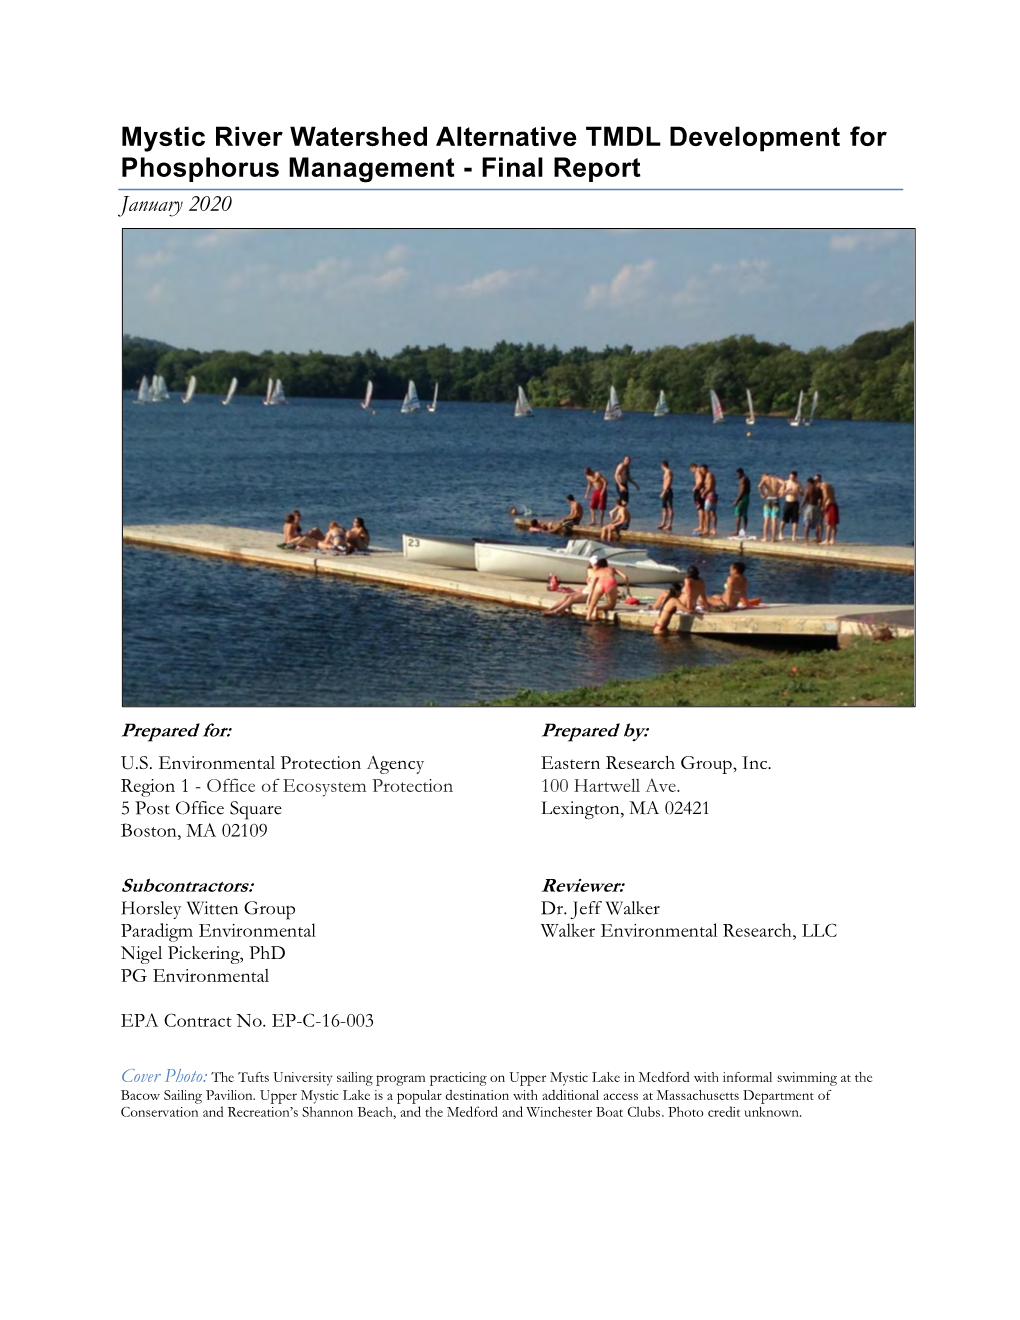 Mystic River Watershed Alternative TMDL Development for Phosphorus Management - Final Report January 2020